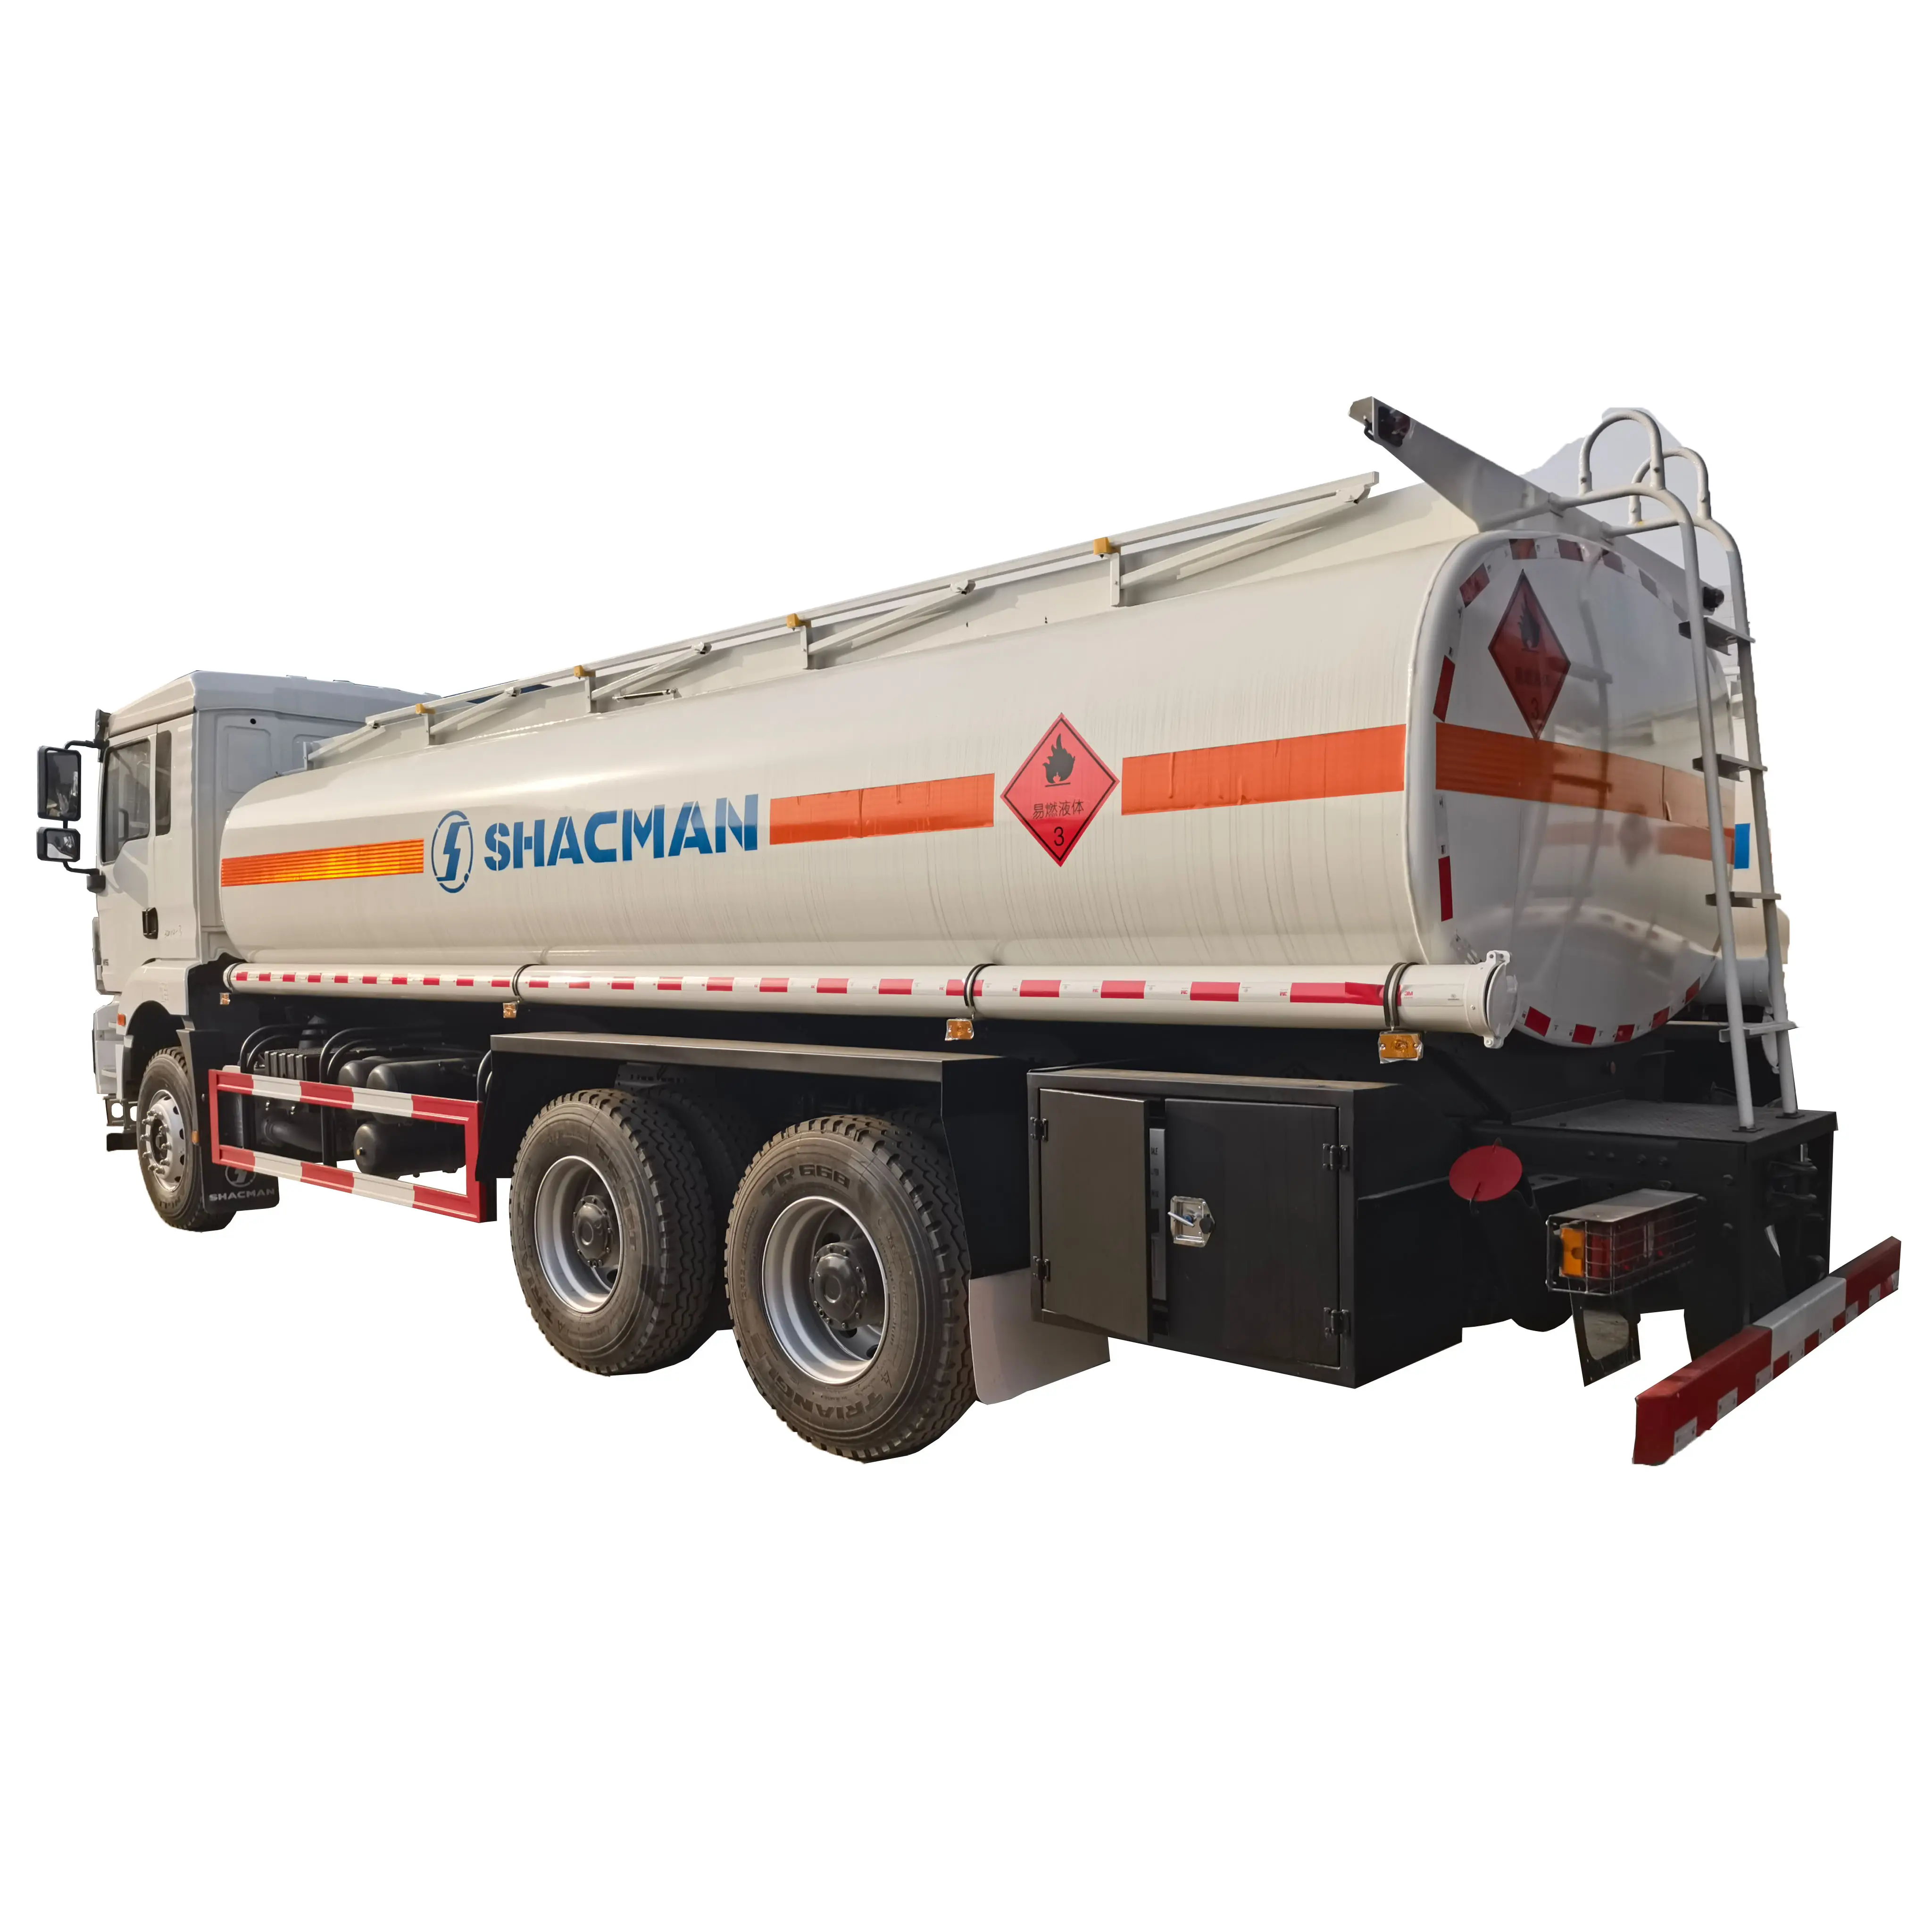 New Model Oil Refueler Tanker Truck Shacman 20000 Liters Fuel Tanker Truck